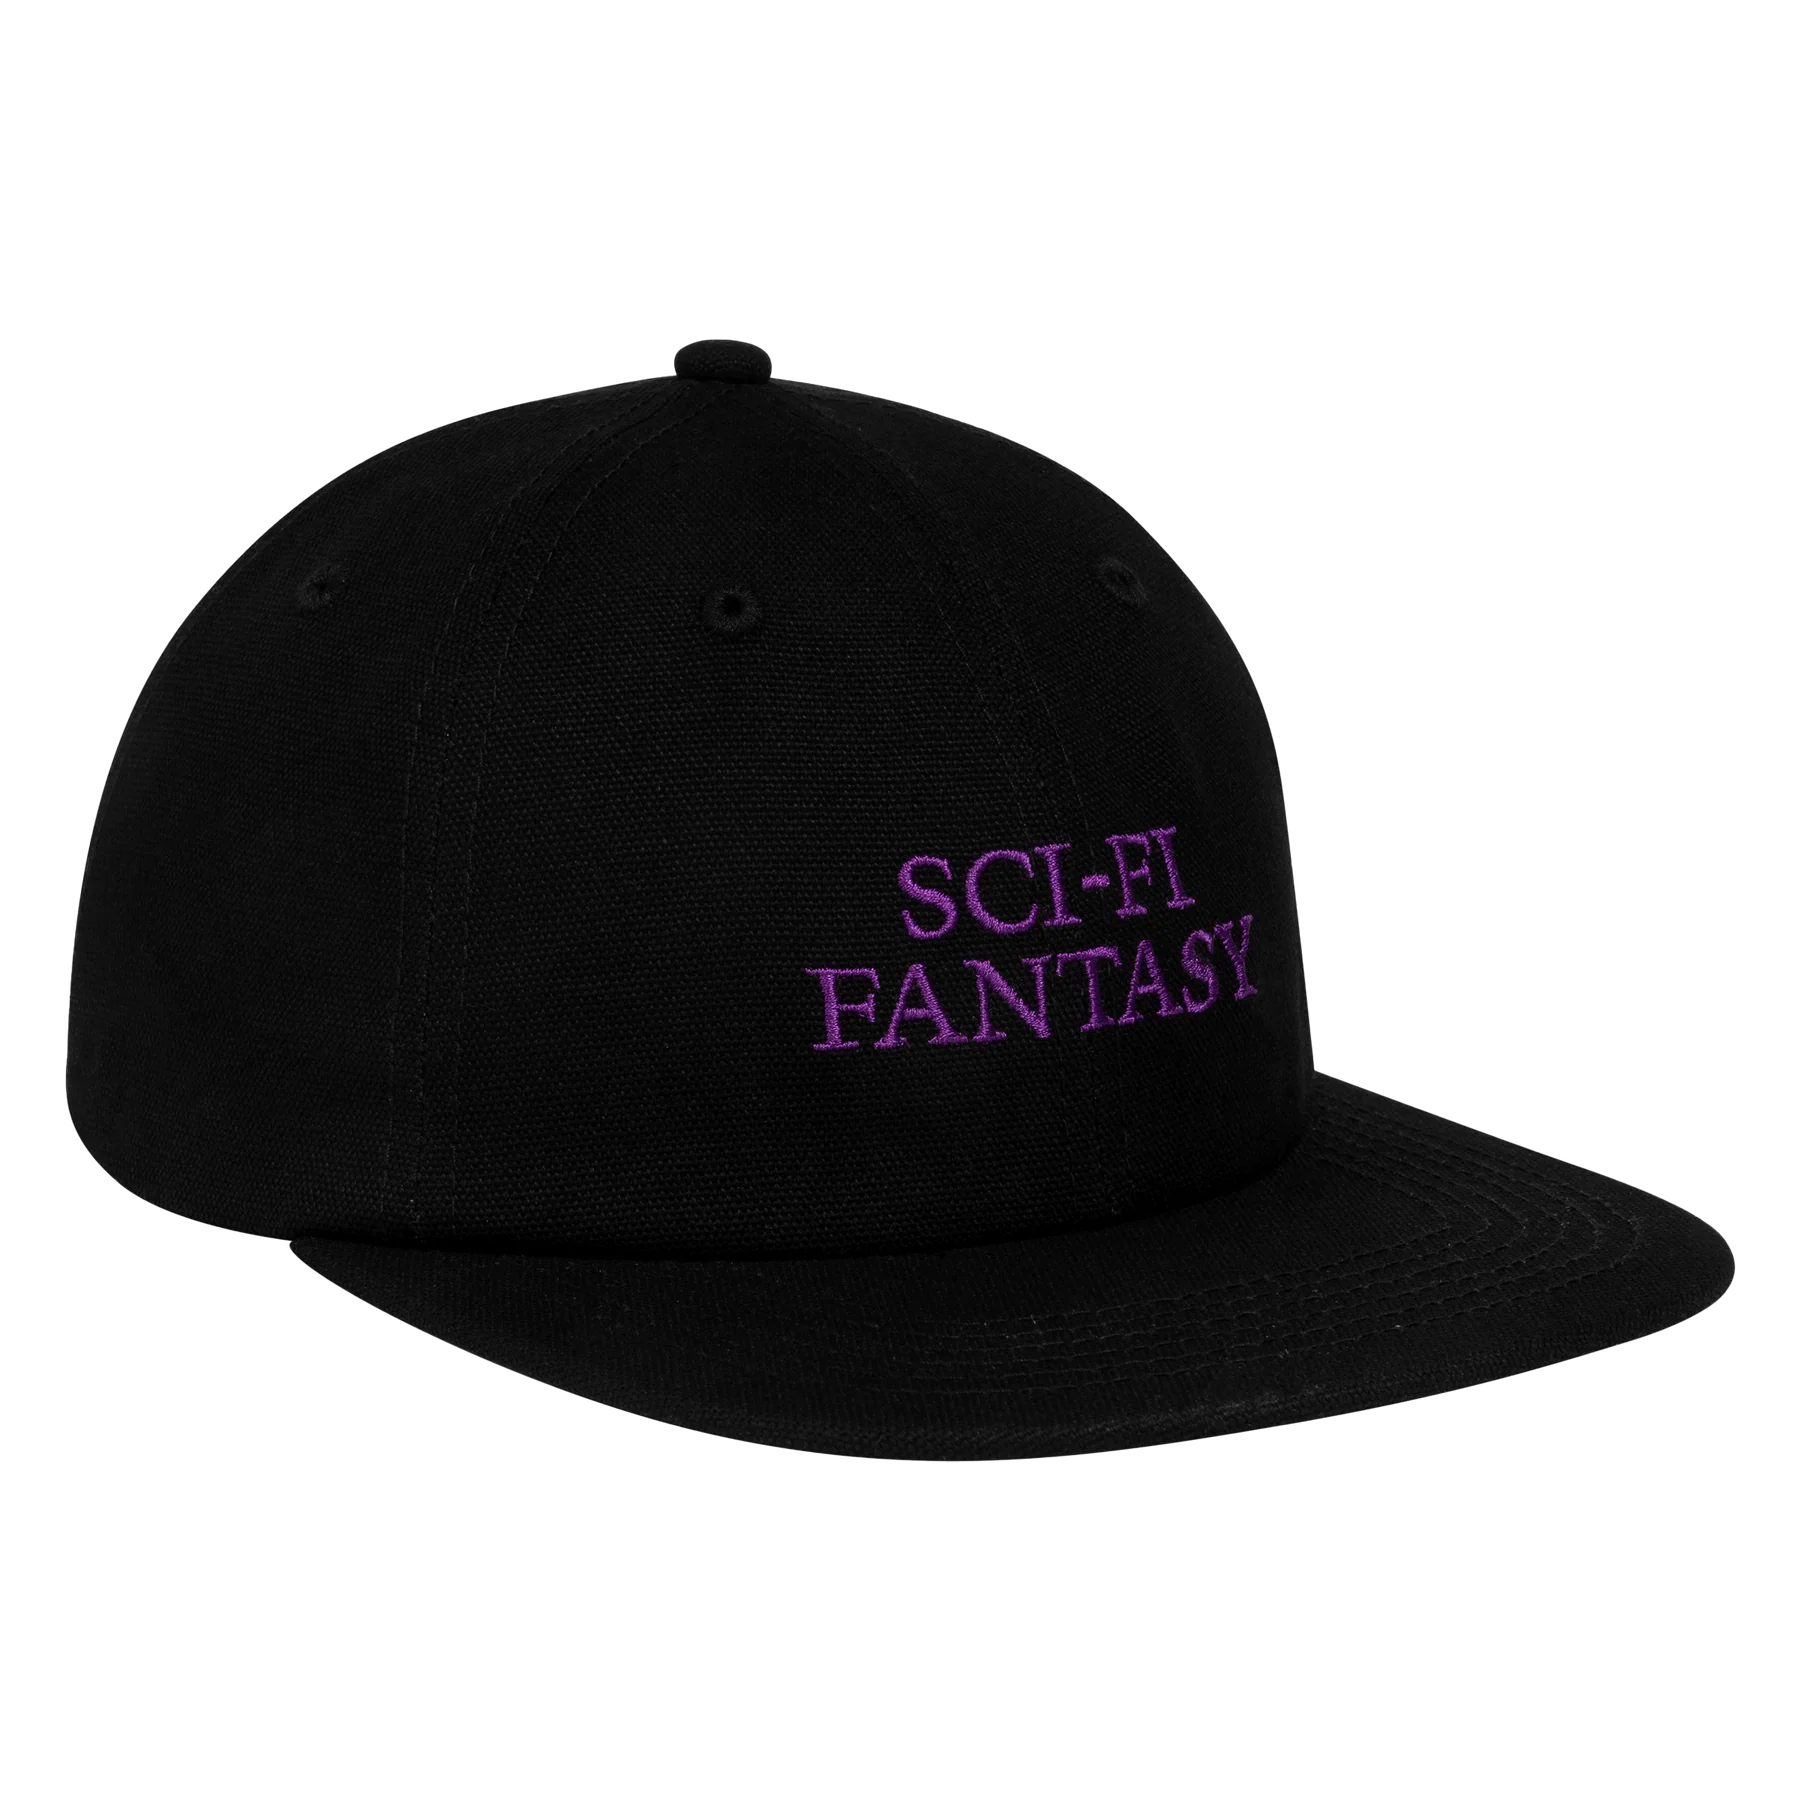 sci-fi fantasy logo hat black